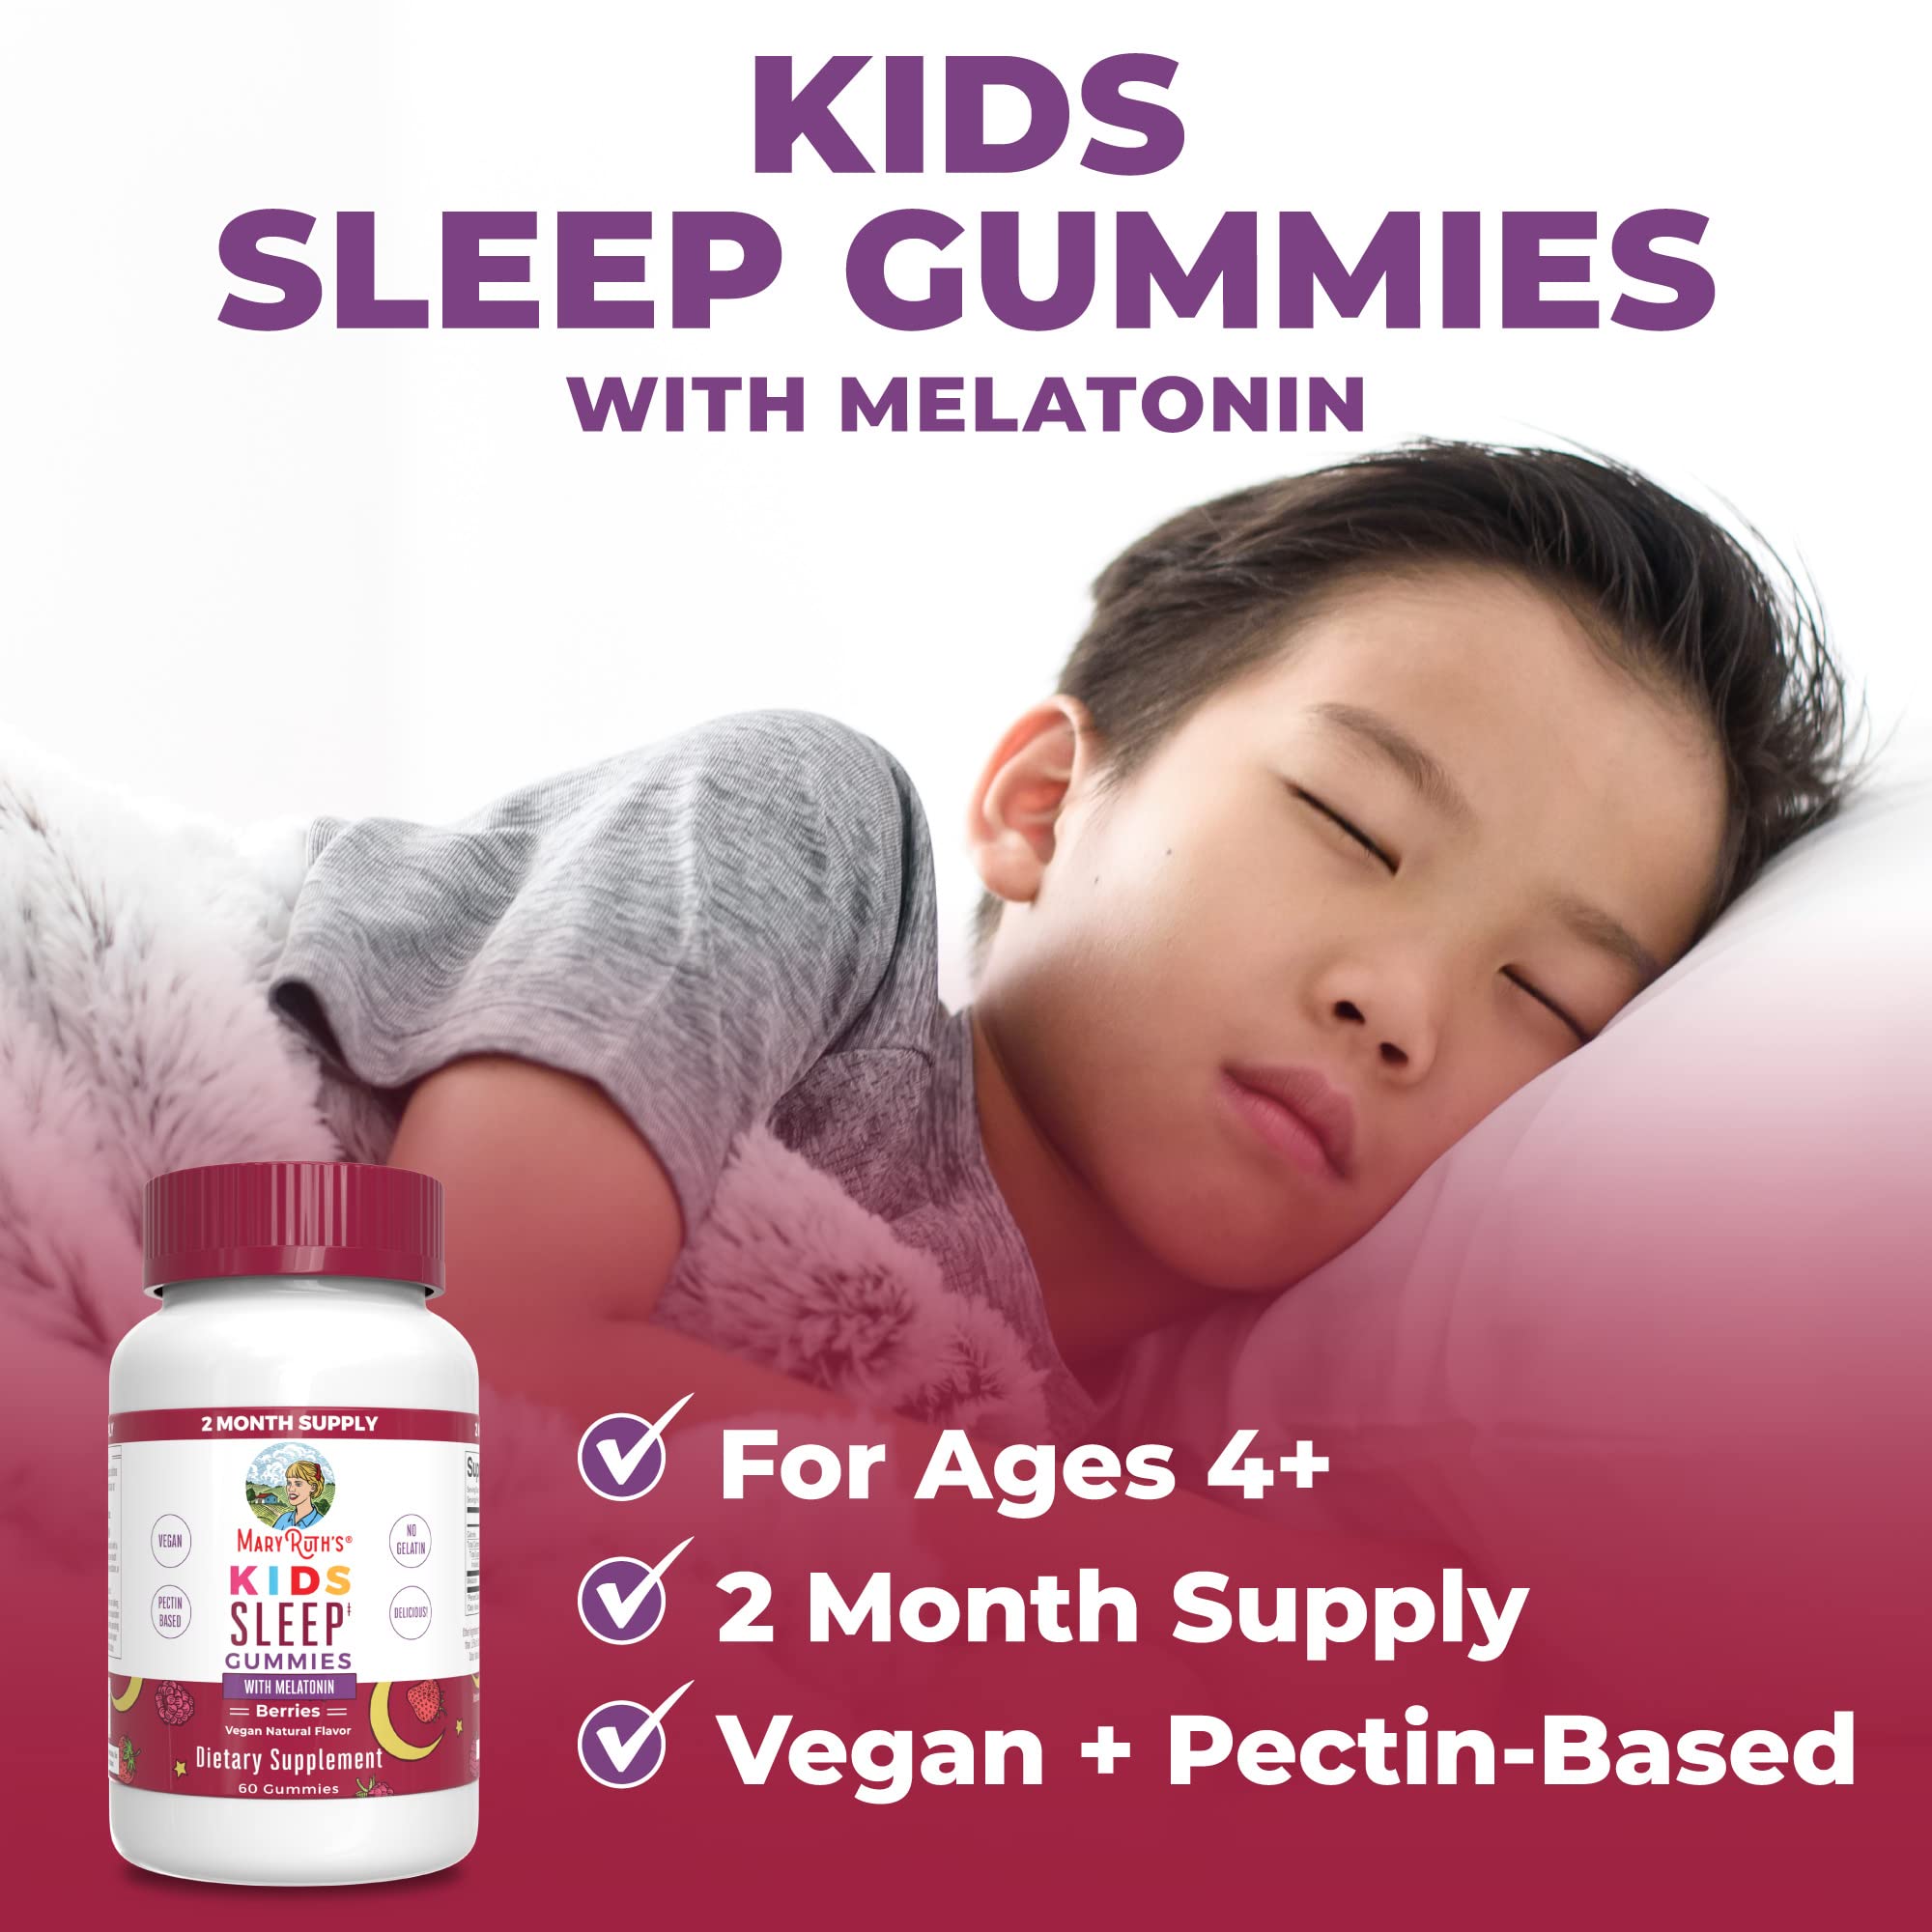 MaryRuth's Kids Multivitamin Gummies & Postbiotics, Kids Immunity Jelly Beans, and Kids Sleep Gummies, 3-Pack Bundle for Bone Health, Digestive Health, Immune Support, & Sleep Support, Vegan & Non-GMO